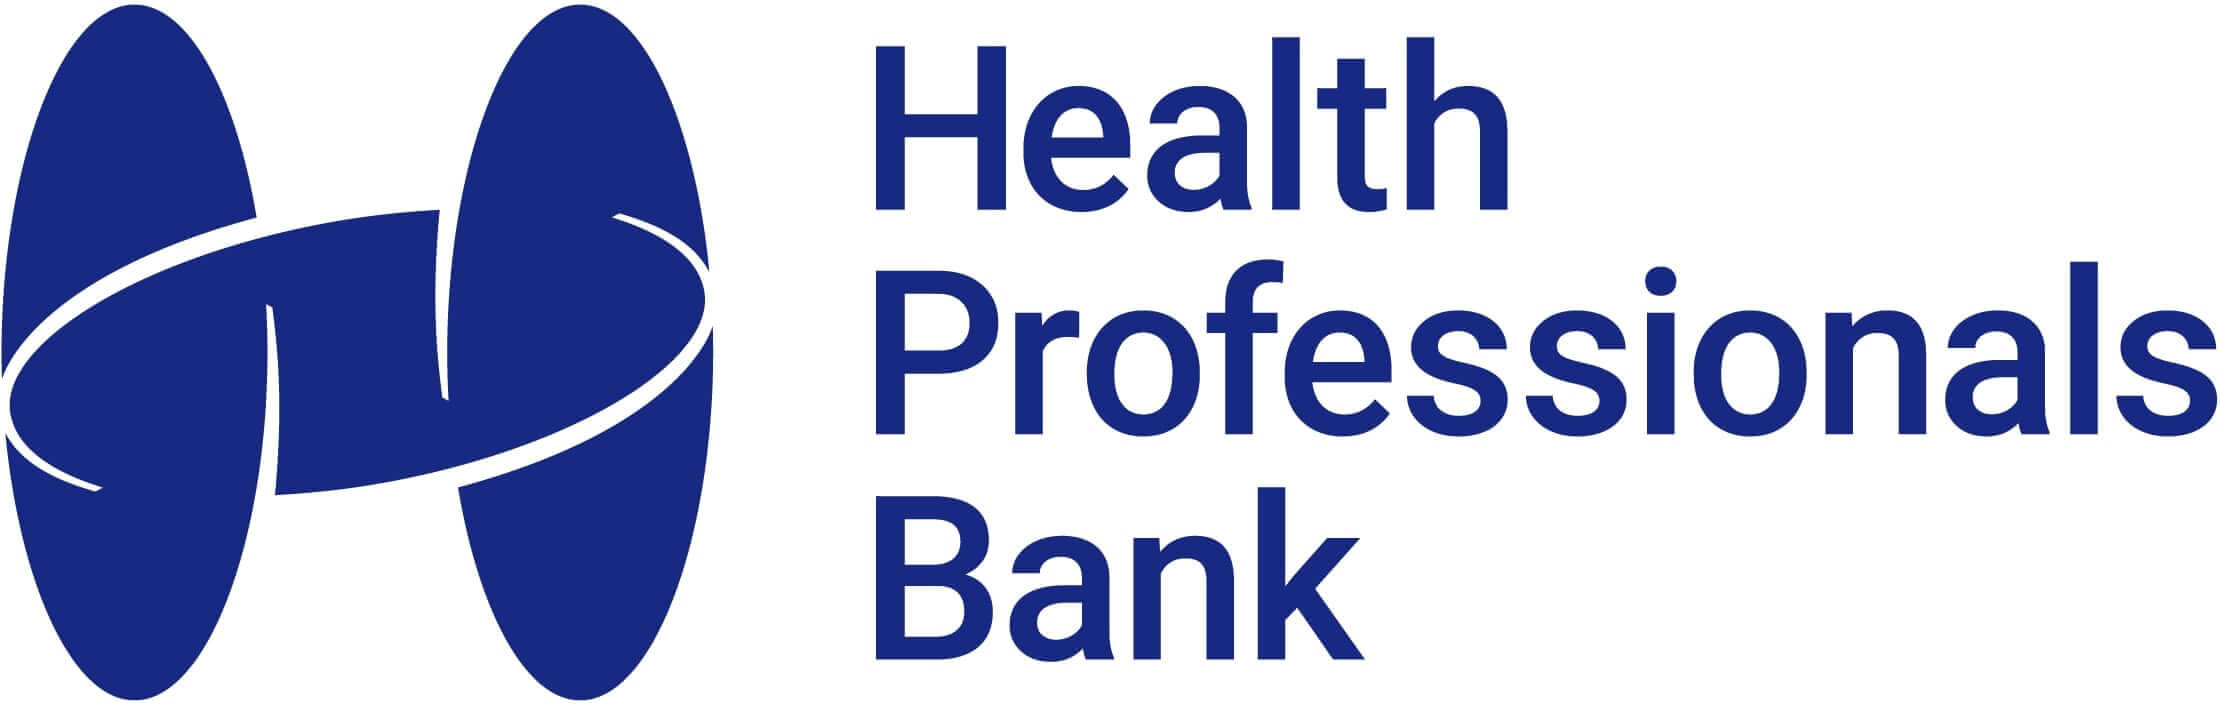 Health Bank logo.jpg